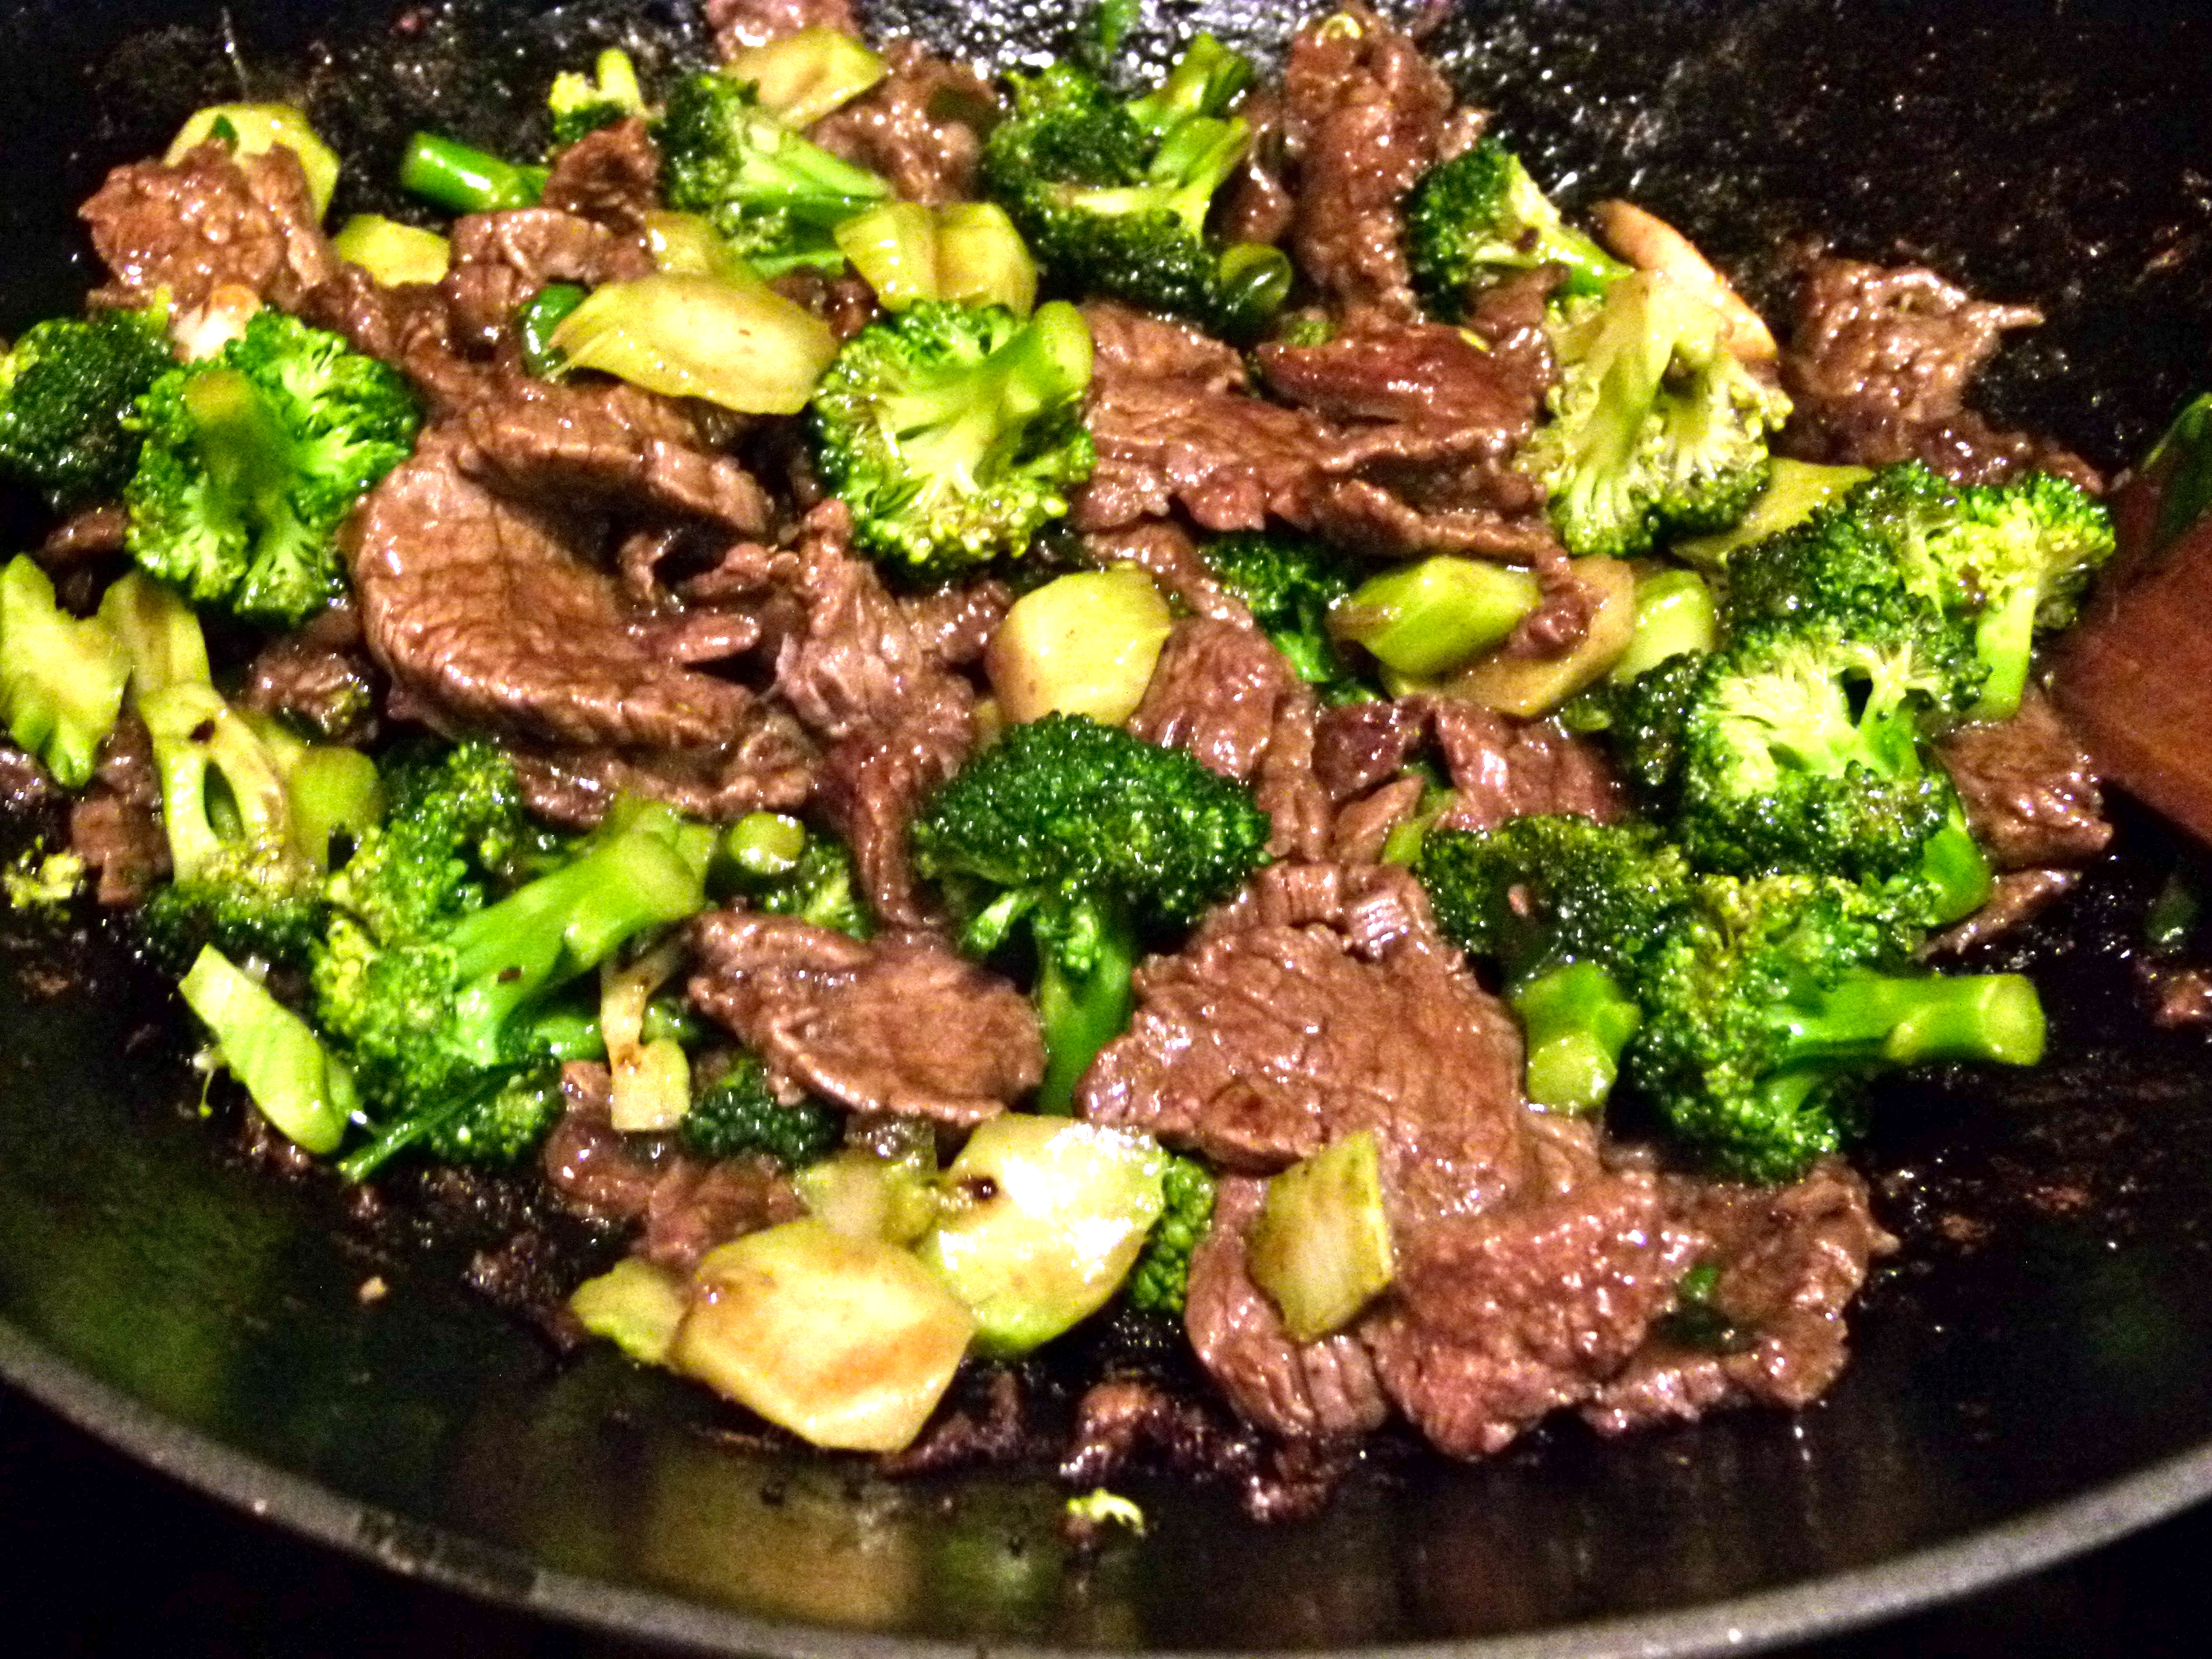 Stir Fried Grass Fed Beef And Broccoli